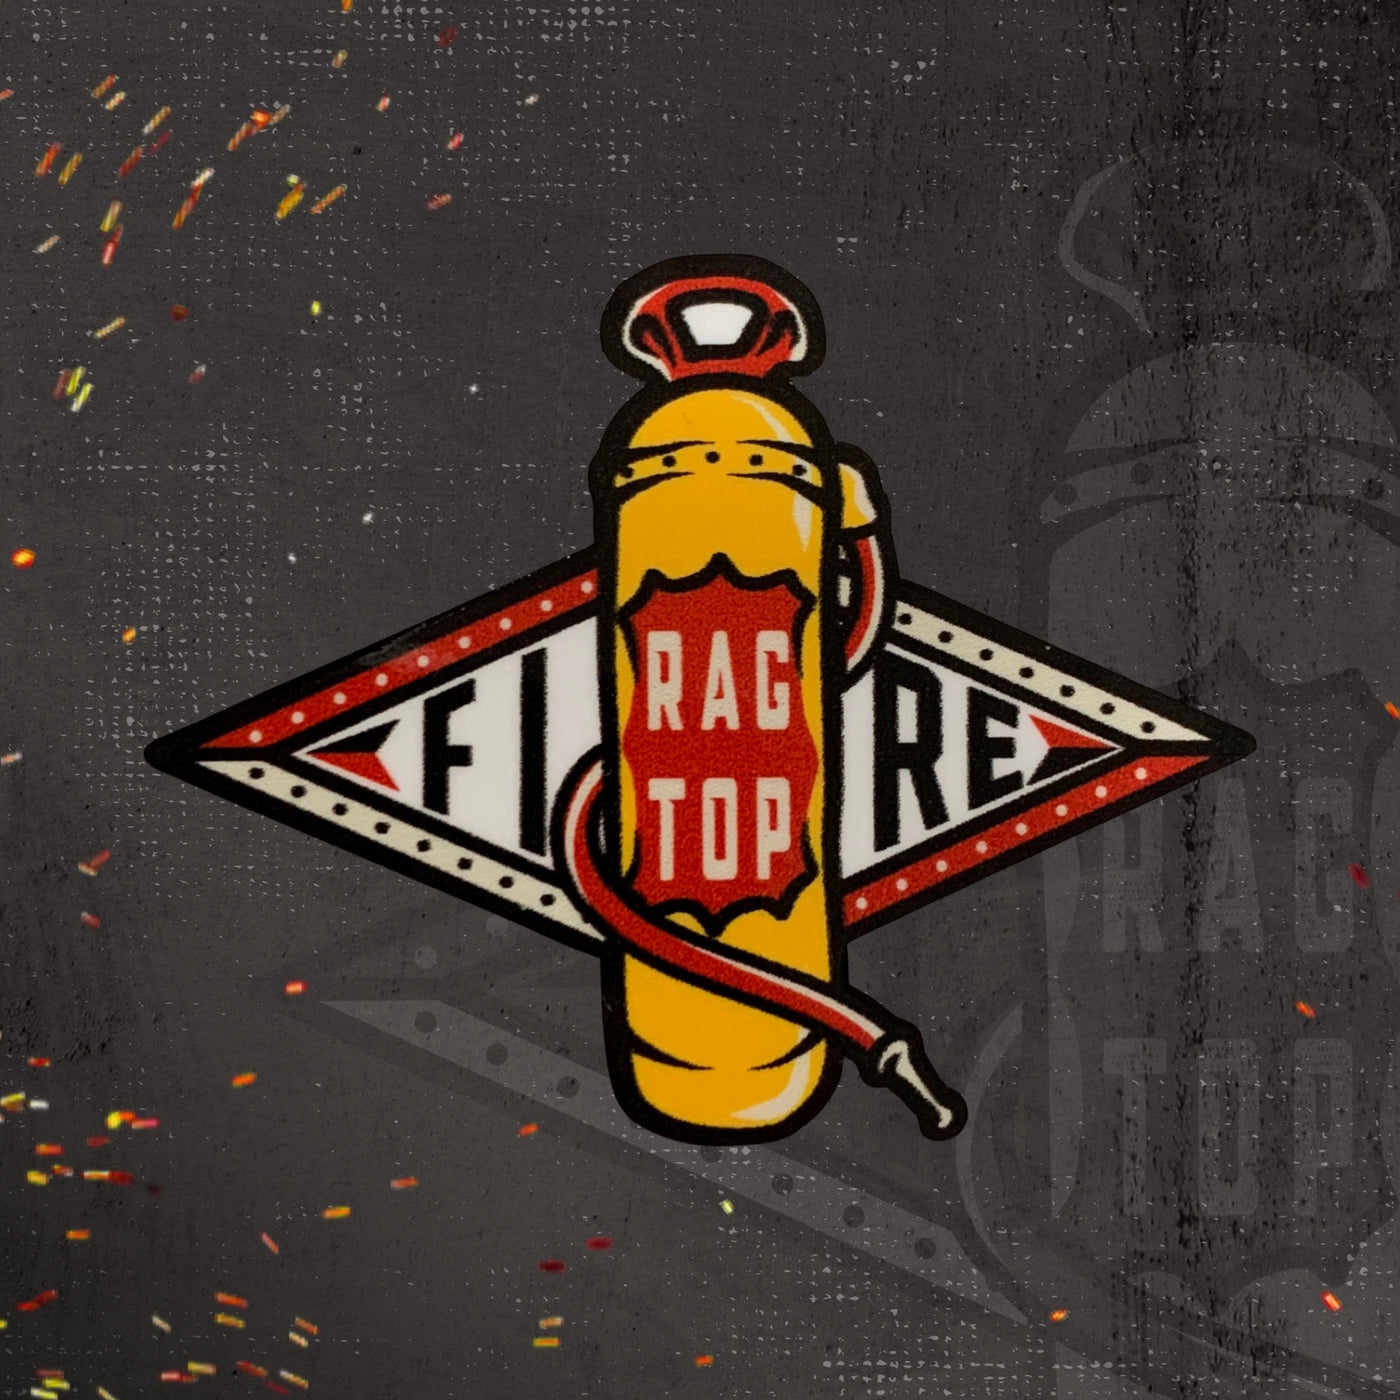 RagTop Fire Extinguisher Decal